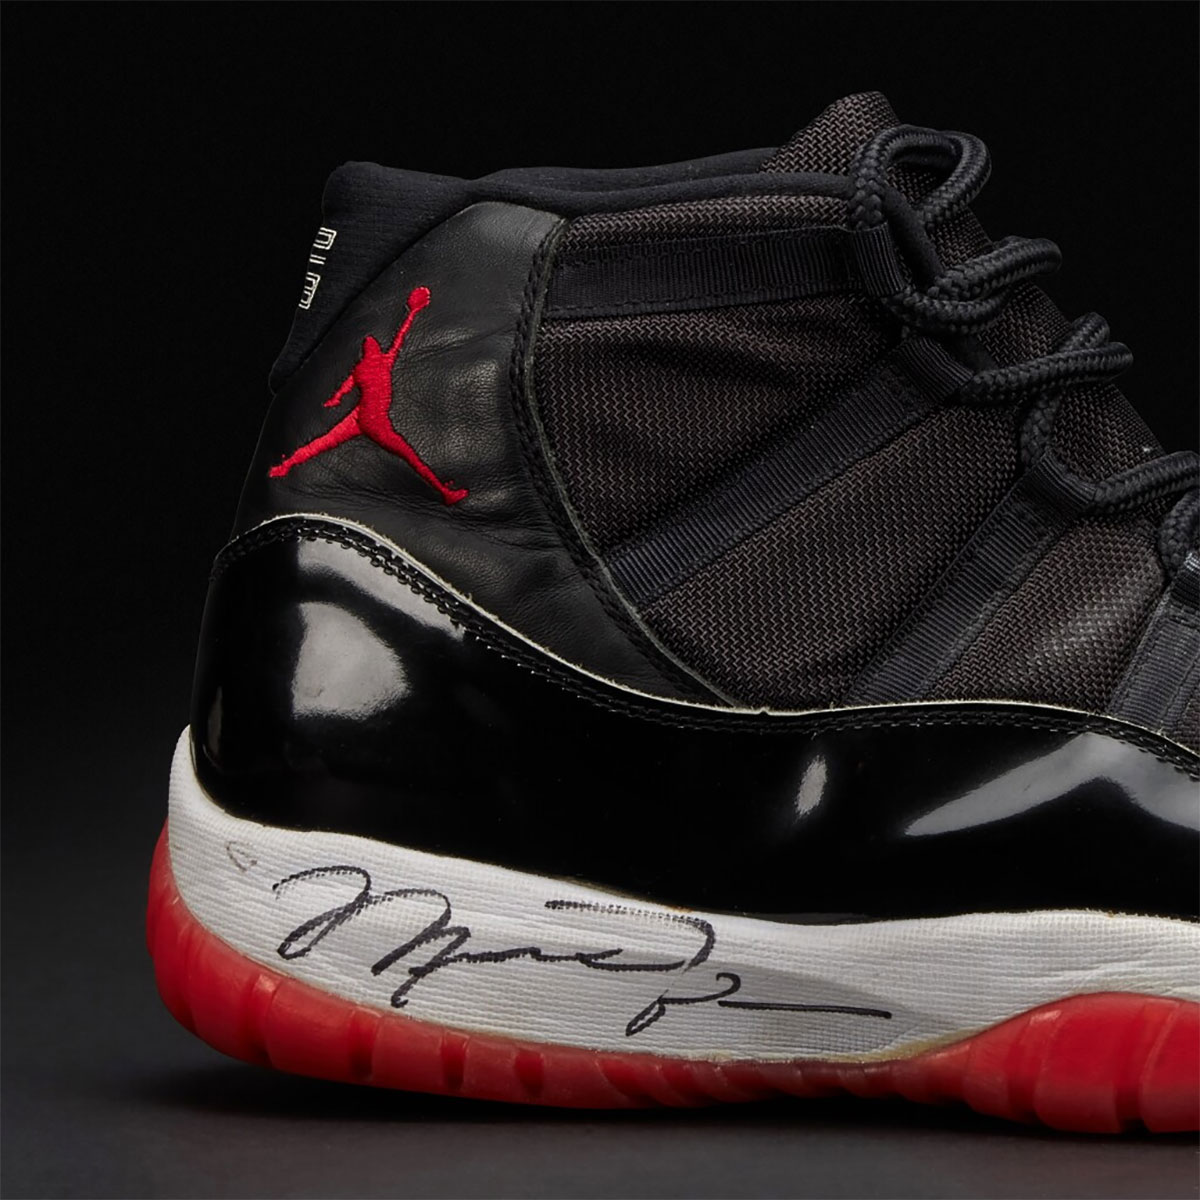 's Jordan Legacy 312 Goes Low Game Worn Autographed Shoes 1996 Finals Auction 5